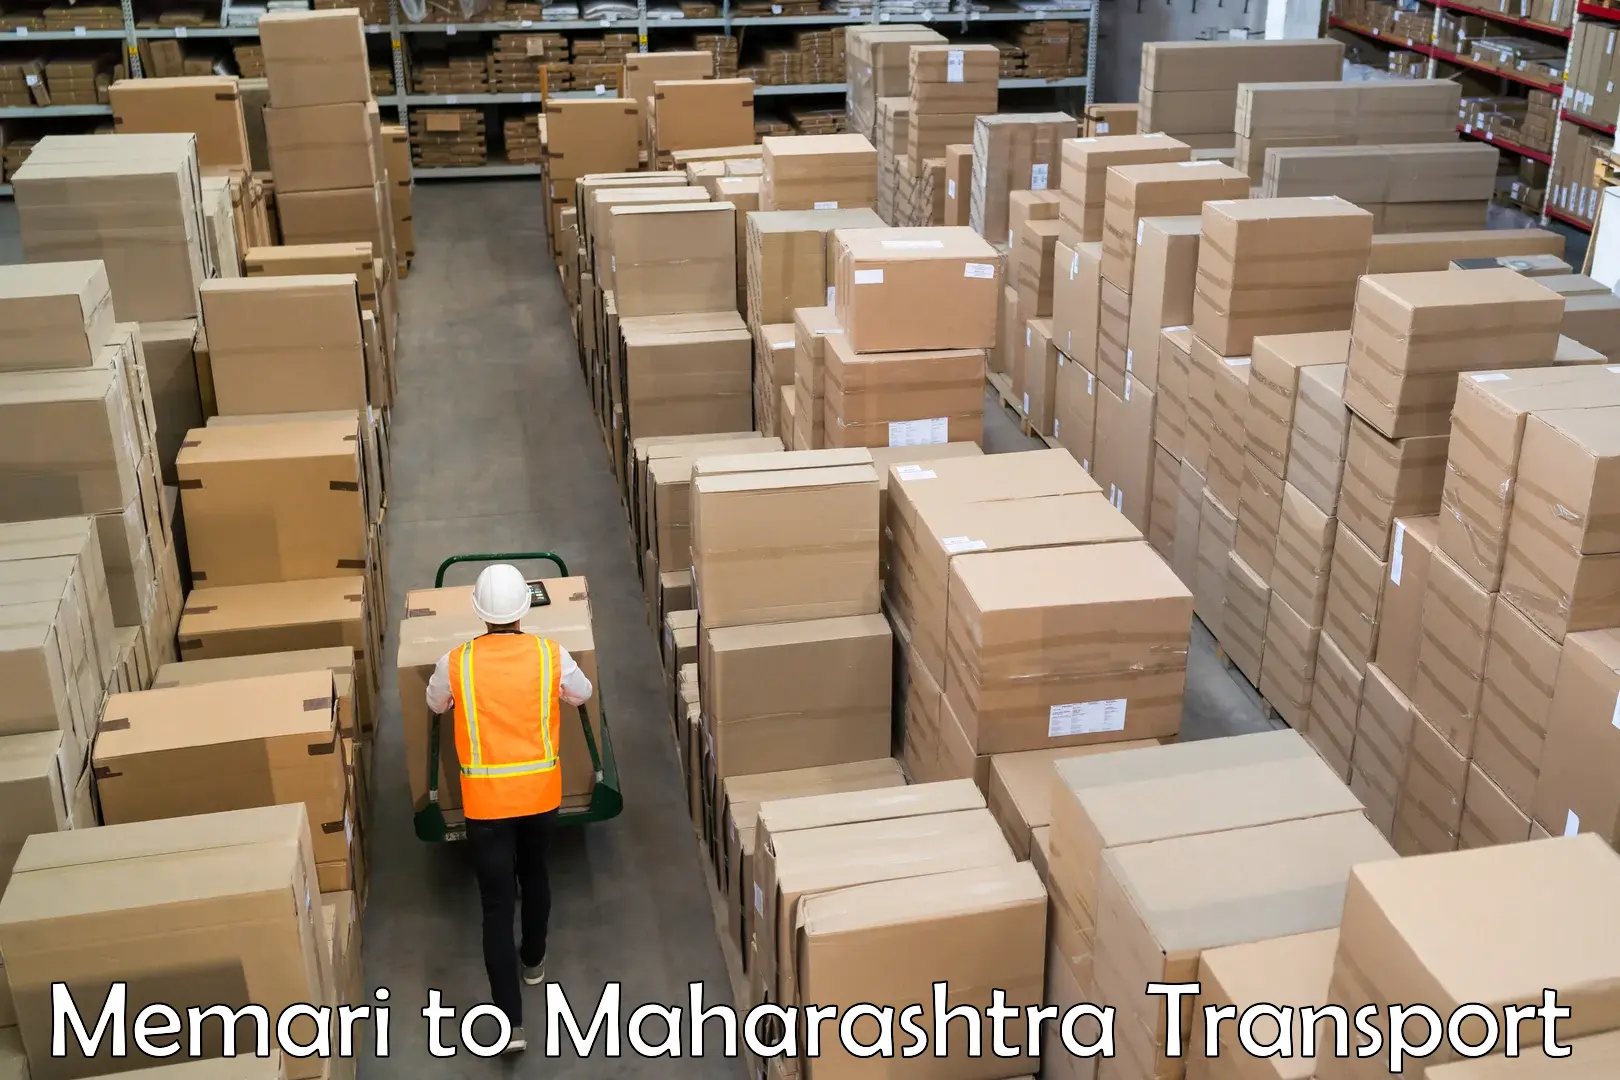 Truck transport companies in India Memari to Brahmapuri